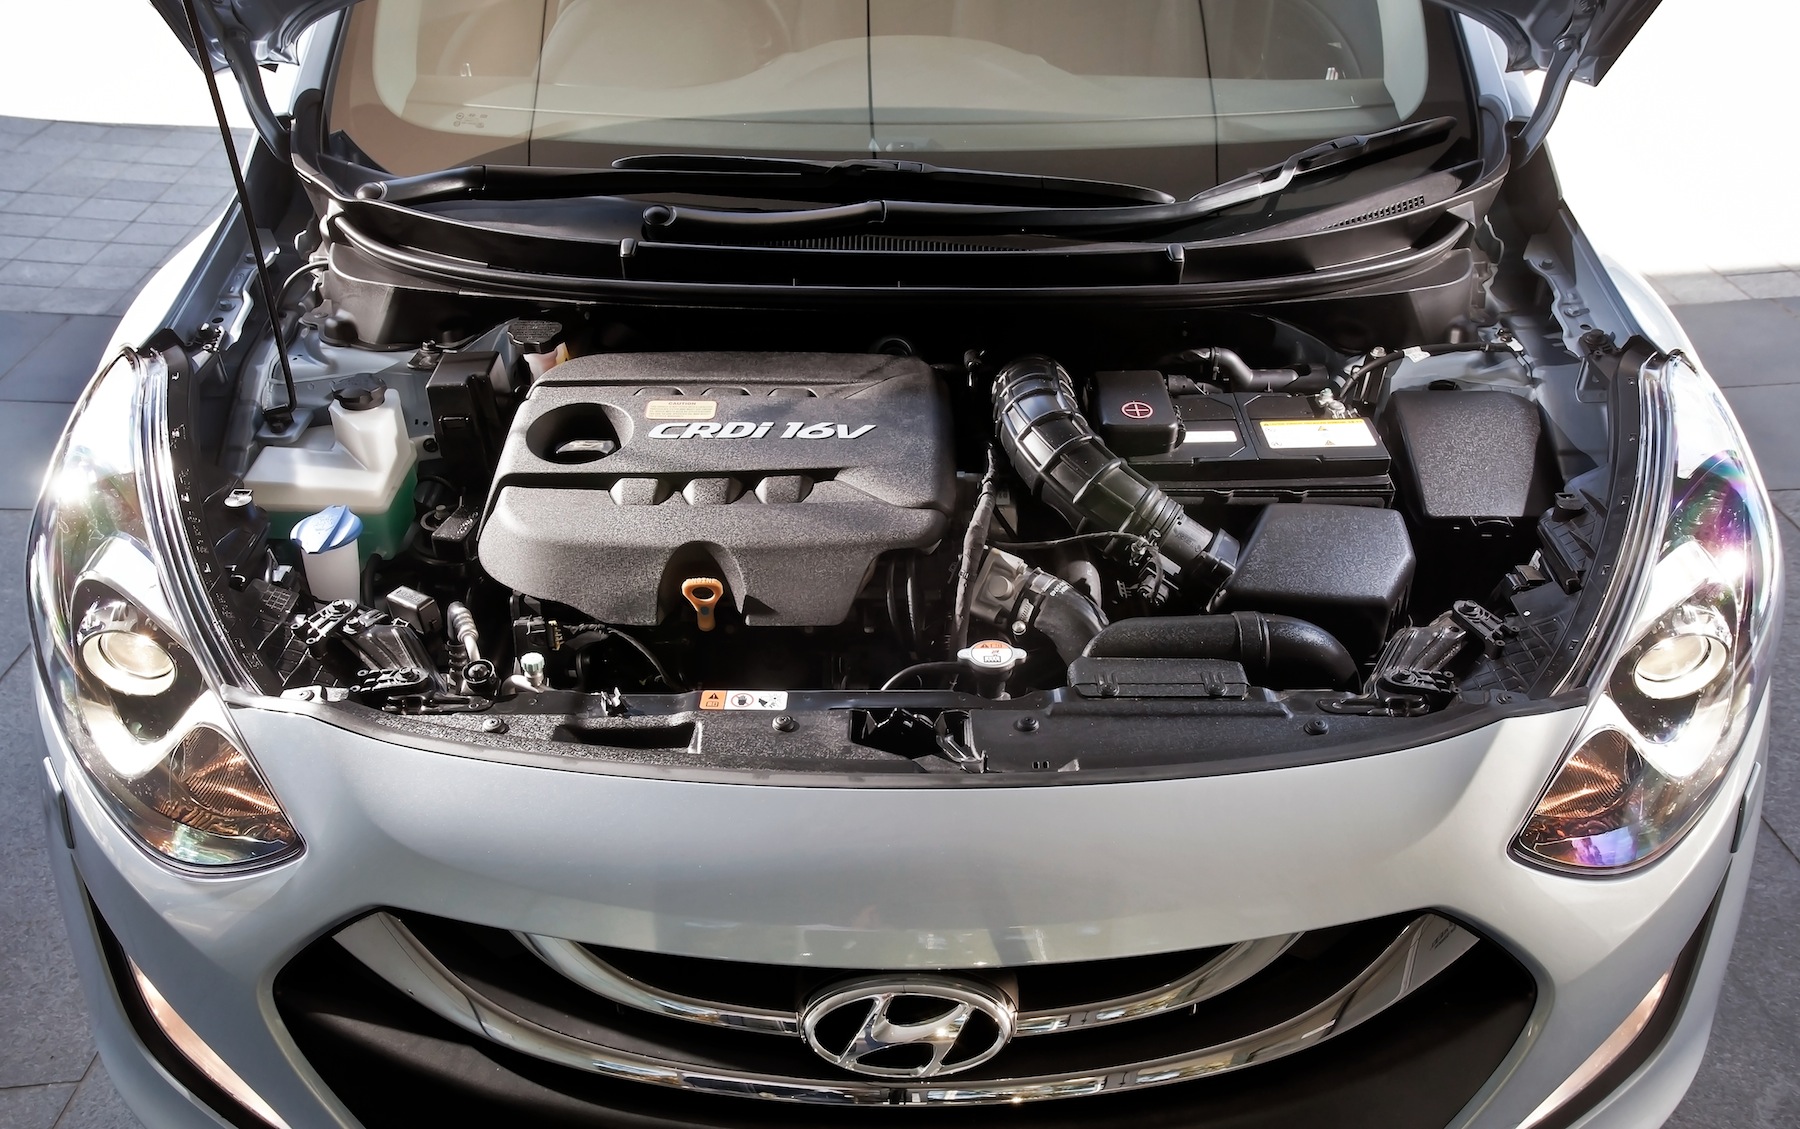 Двигатель хендай 30. Hyundai i30 двигатель. Hyundai i30 2013 под капотом. Хендай ай 30 под капотом. Hyundai i30 дизельный 1,6 двигатель.